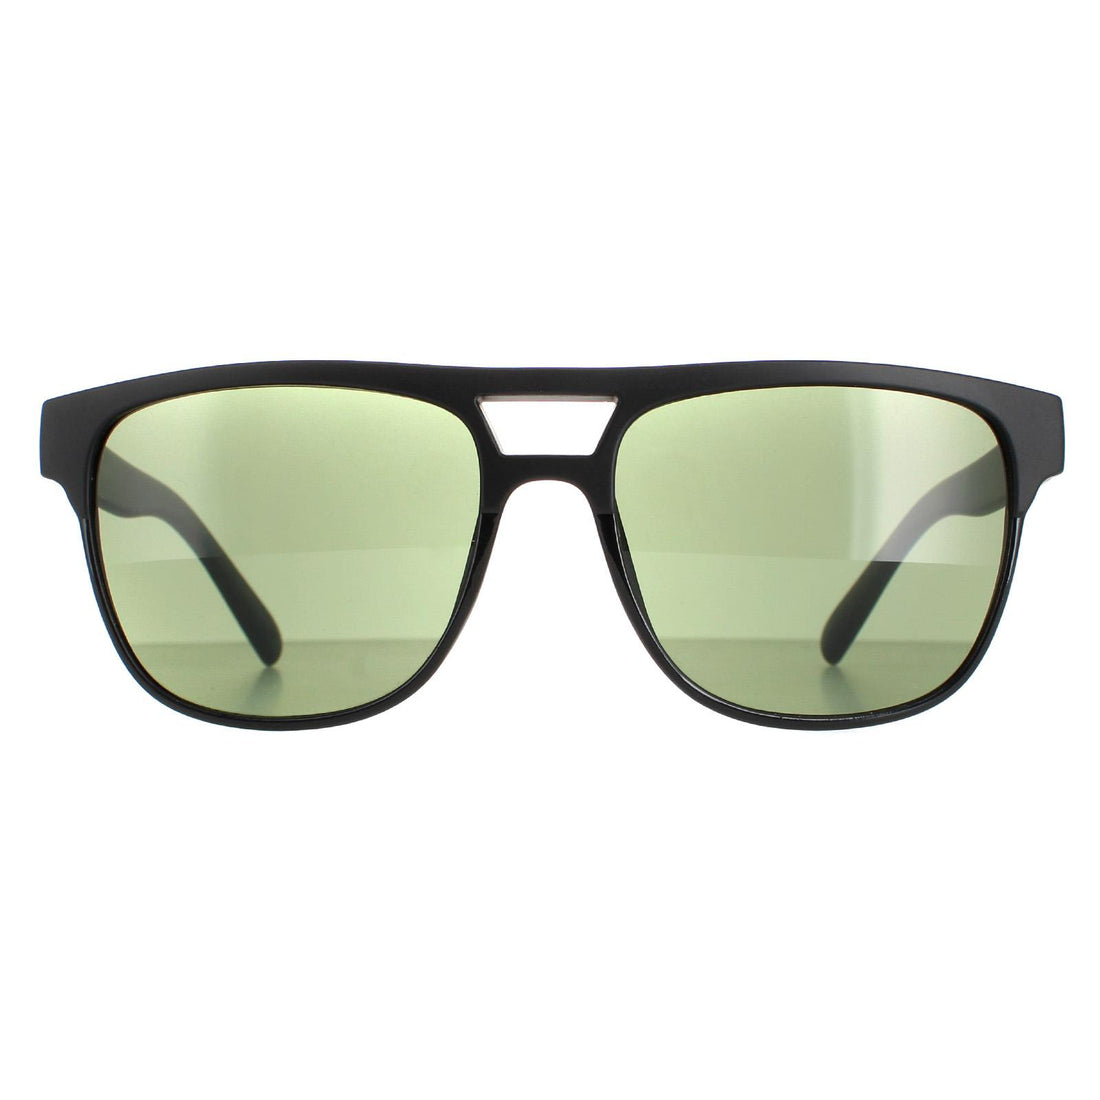 Calvin Klein CK20523S Sunglasses Matte Black / Solid Green G15